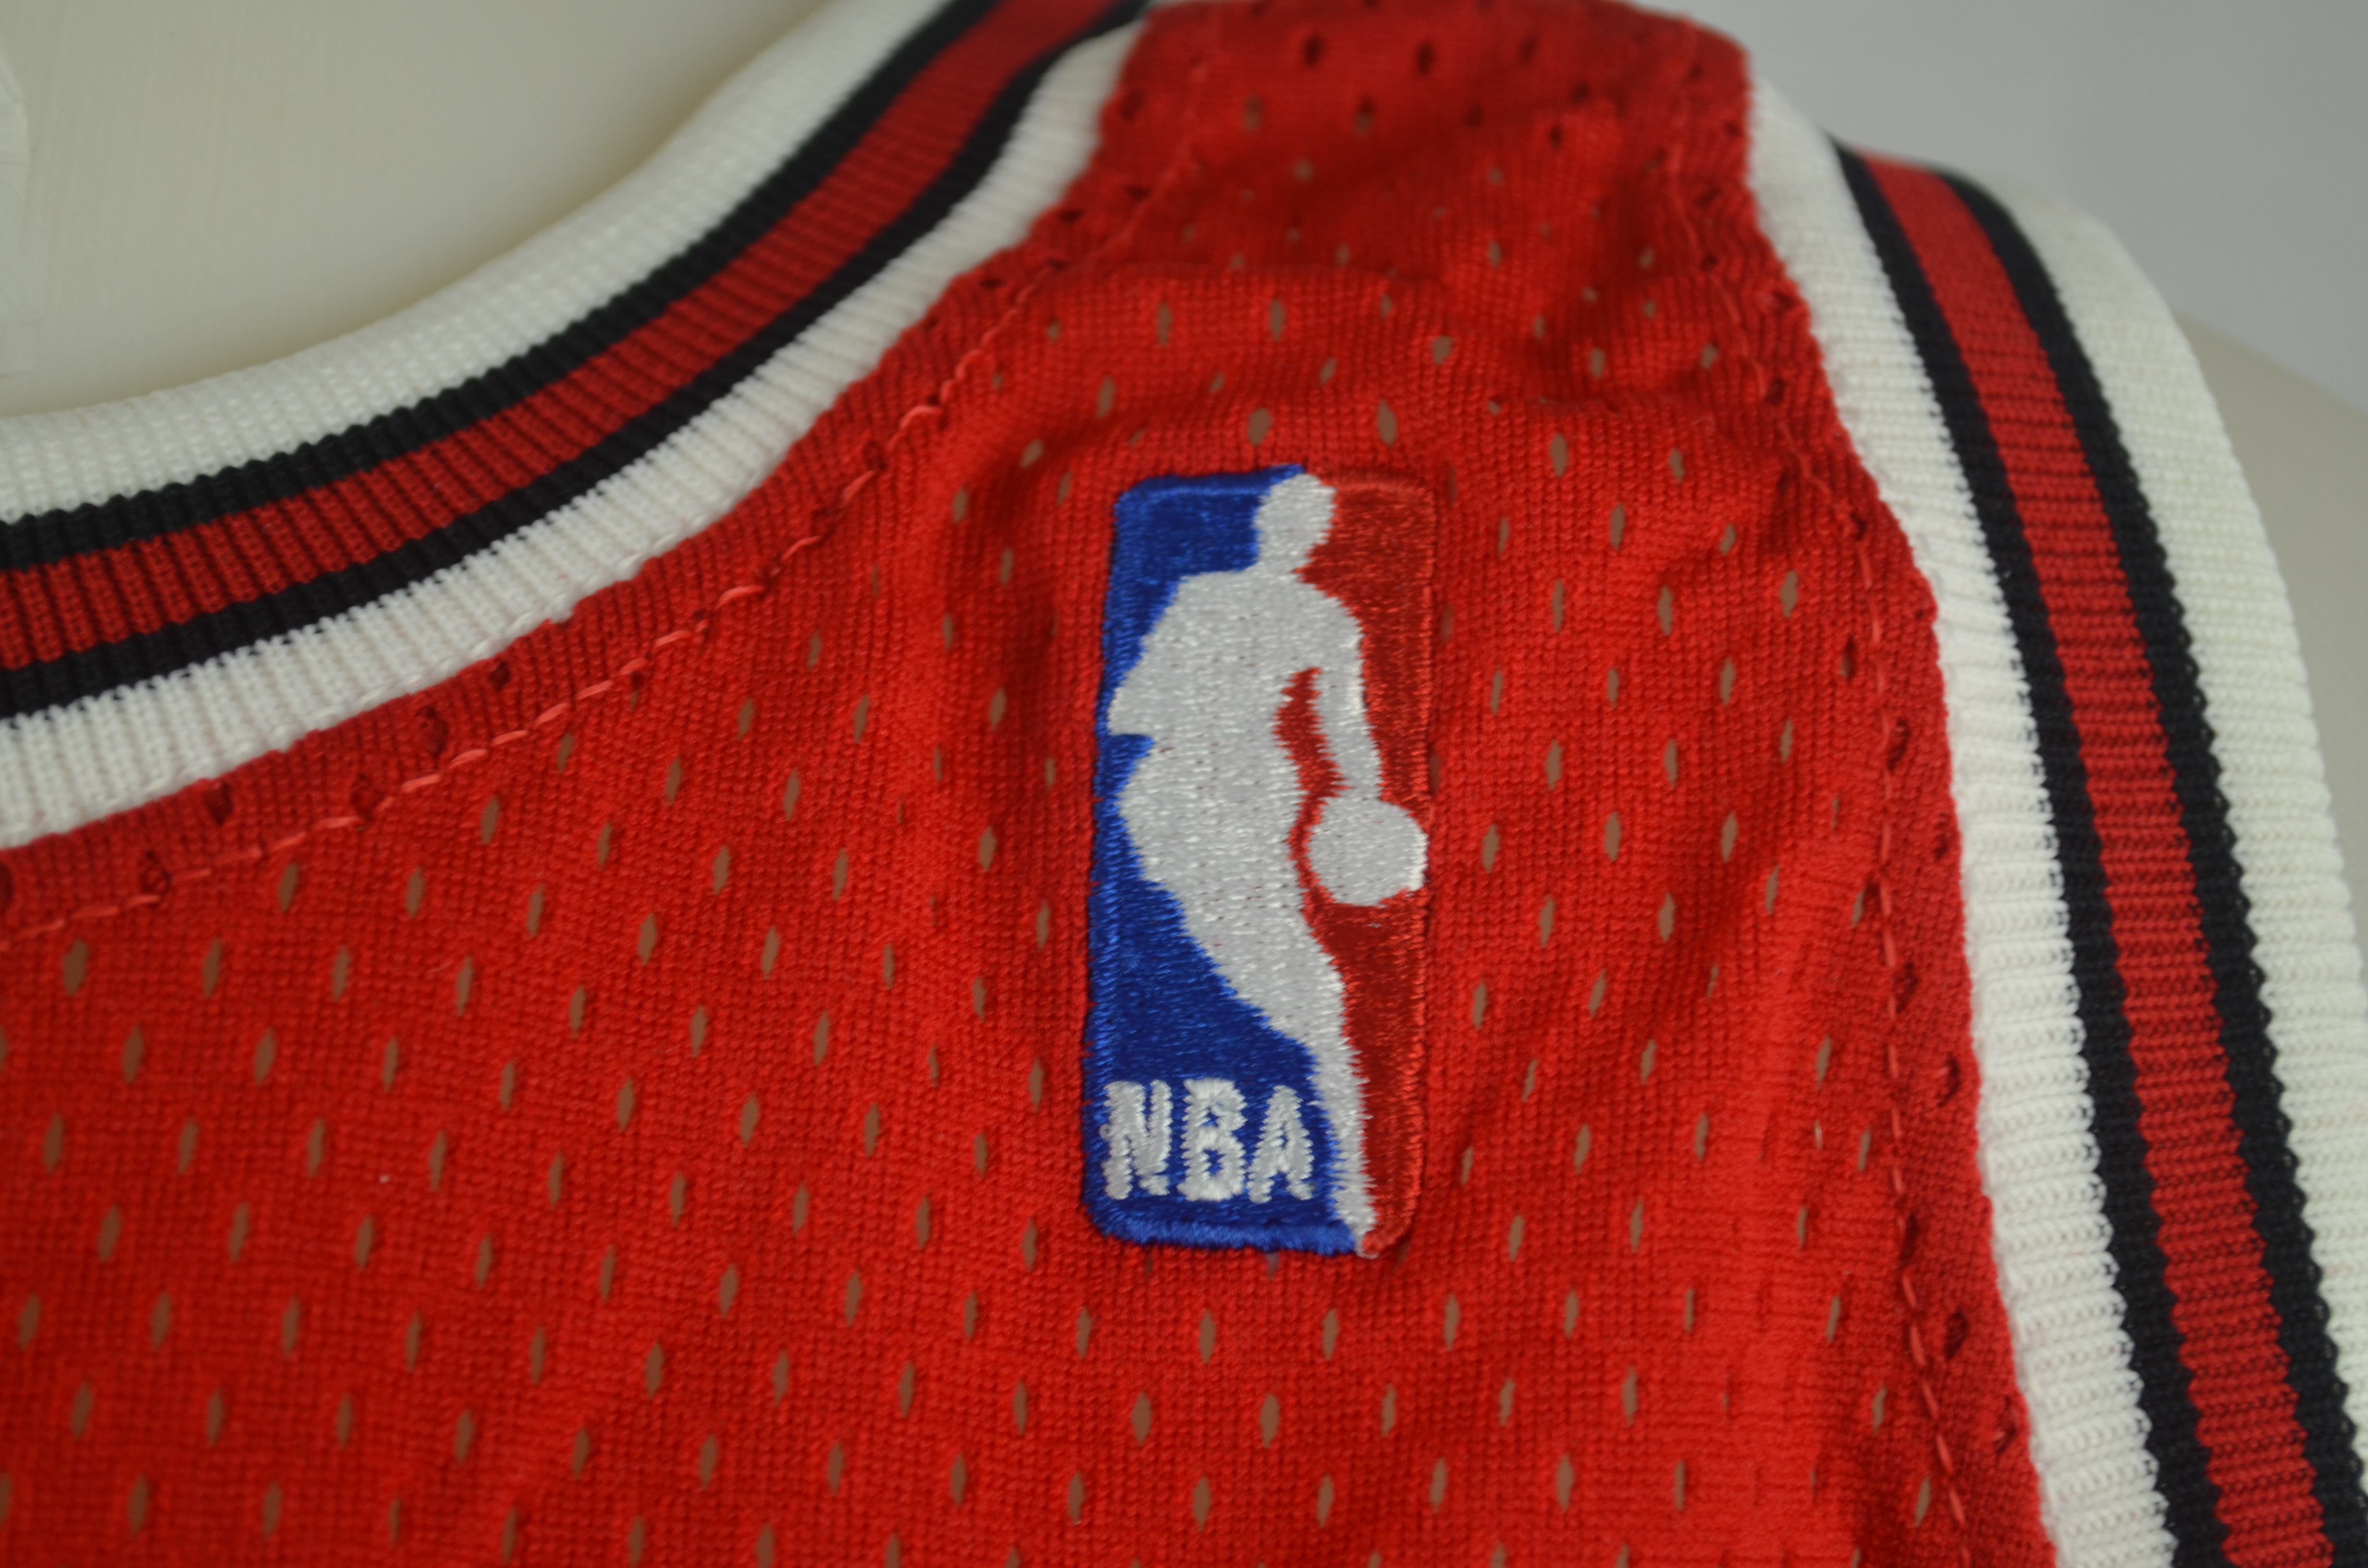 Chicago Bulls Michael Jordan 1995/96 Red Champion Jersey - The